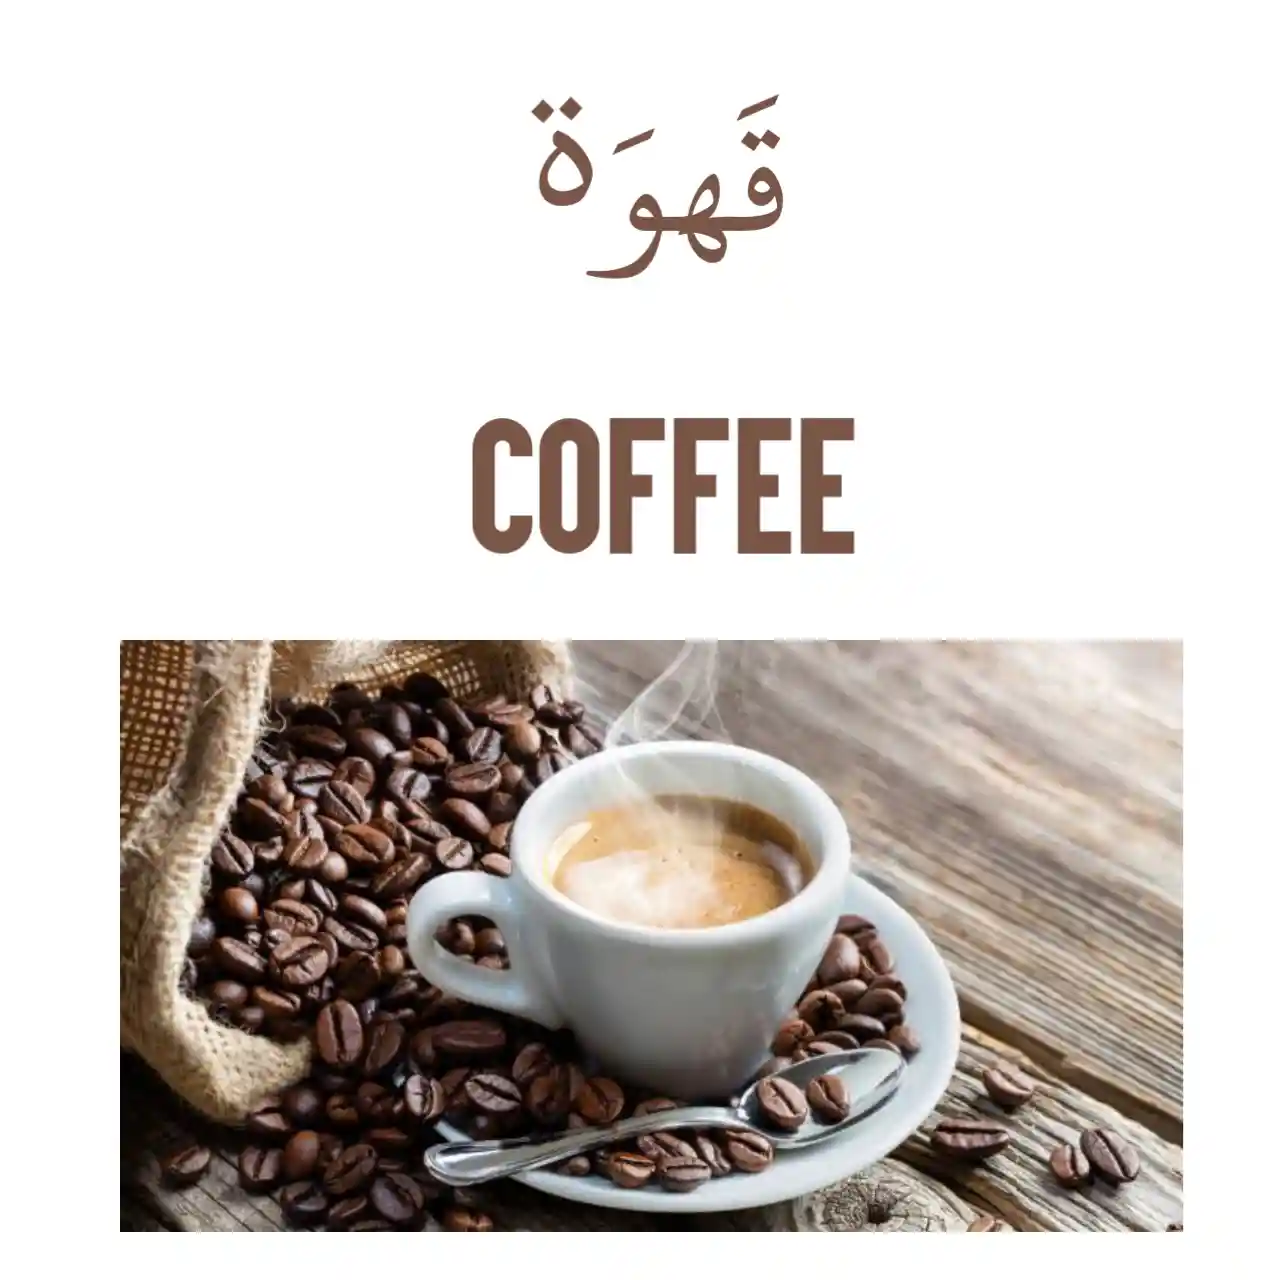 Coffee in Arabic